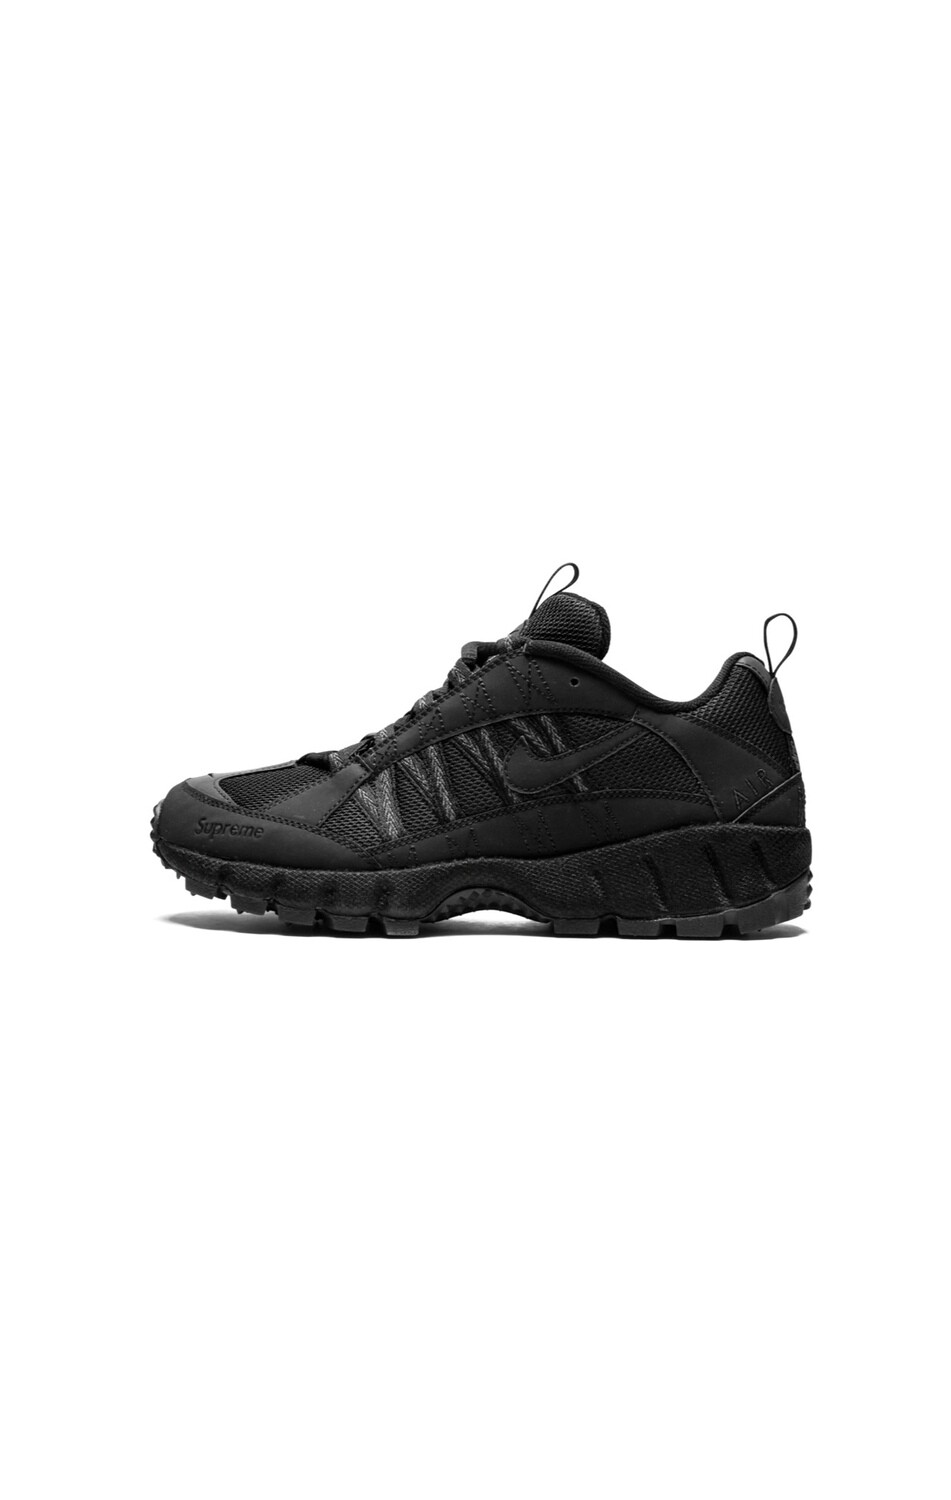 Nike Air Humara “Supreme Black”🕷